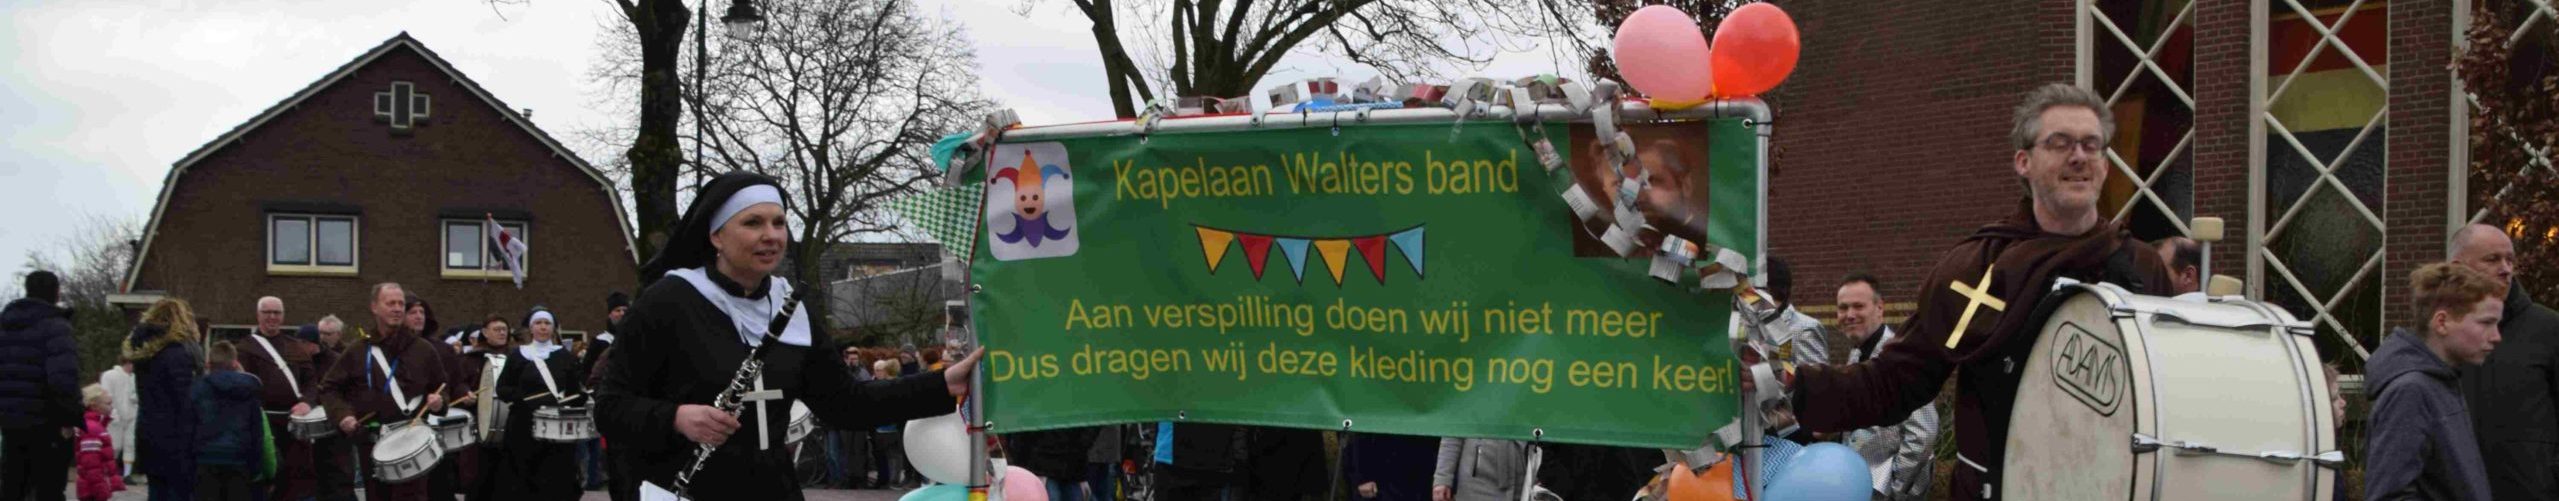 Carnaval in Doornenburg